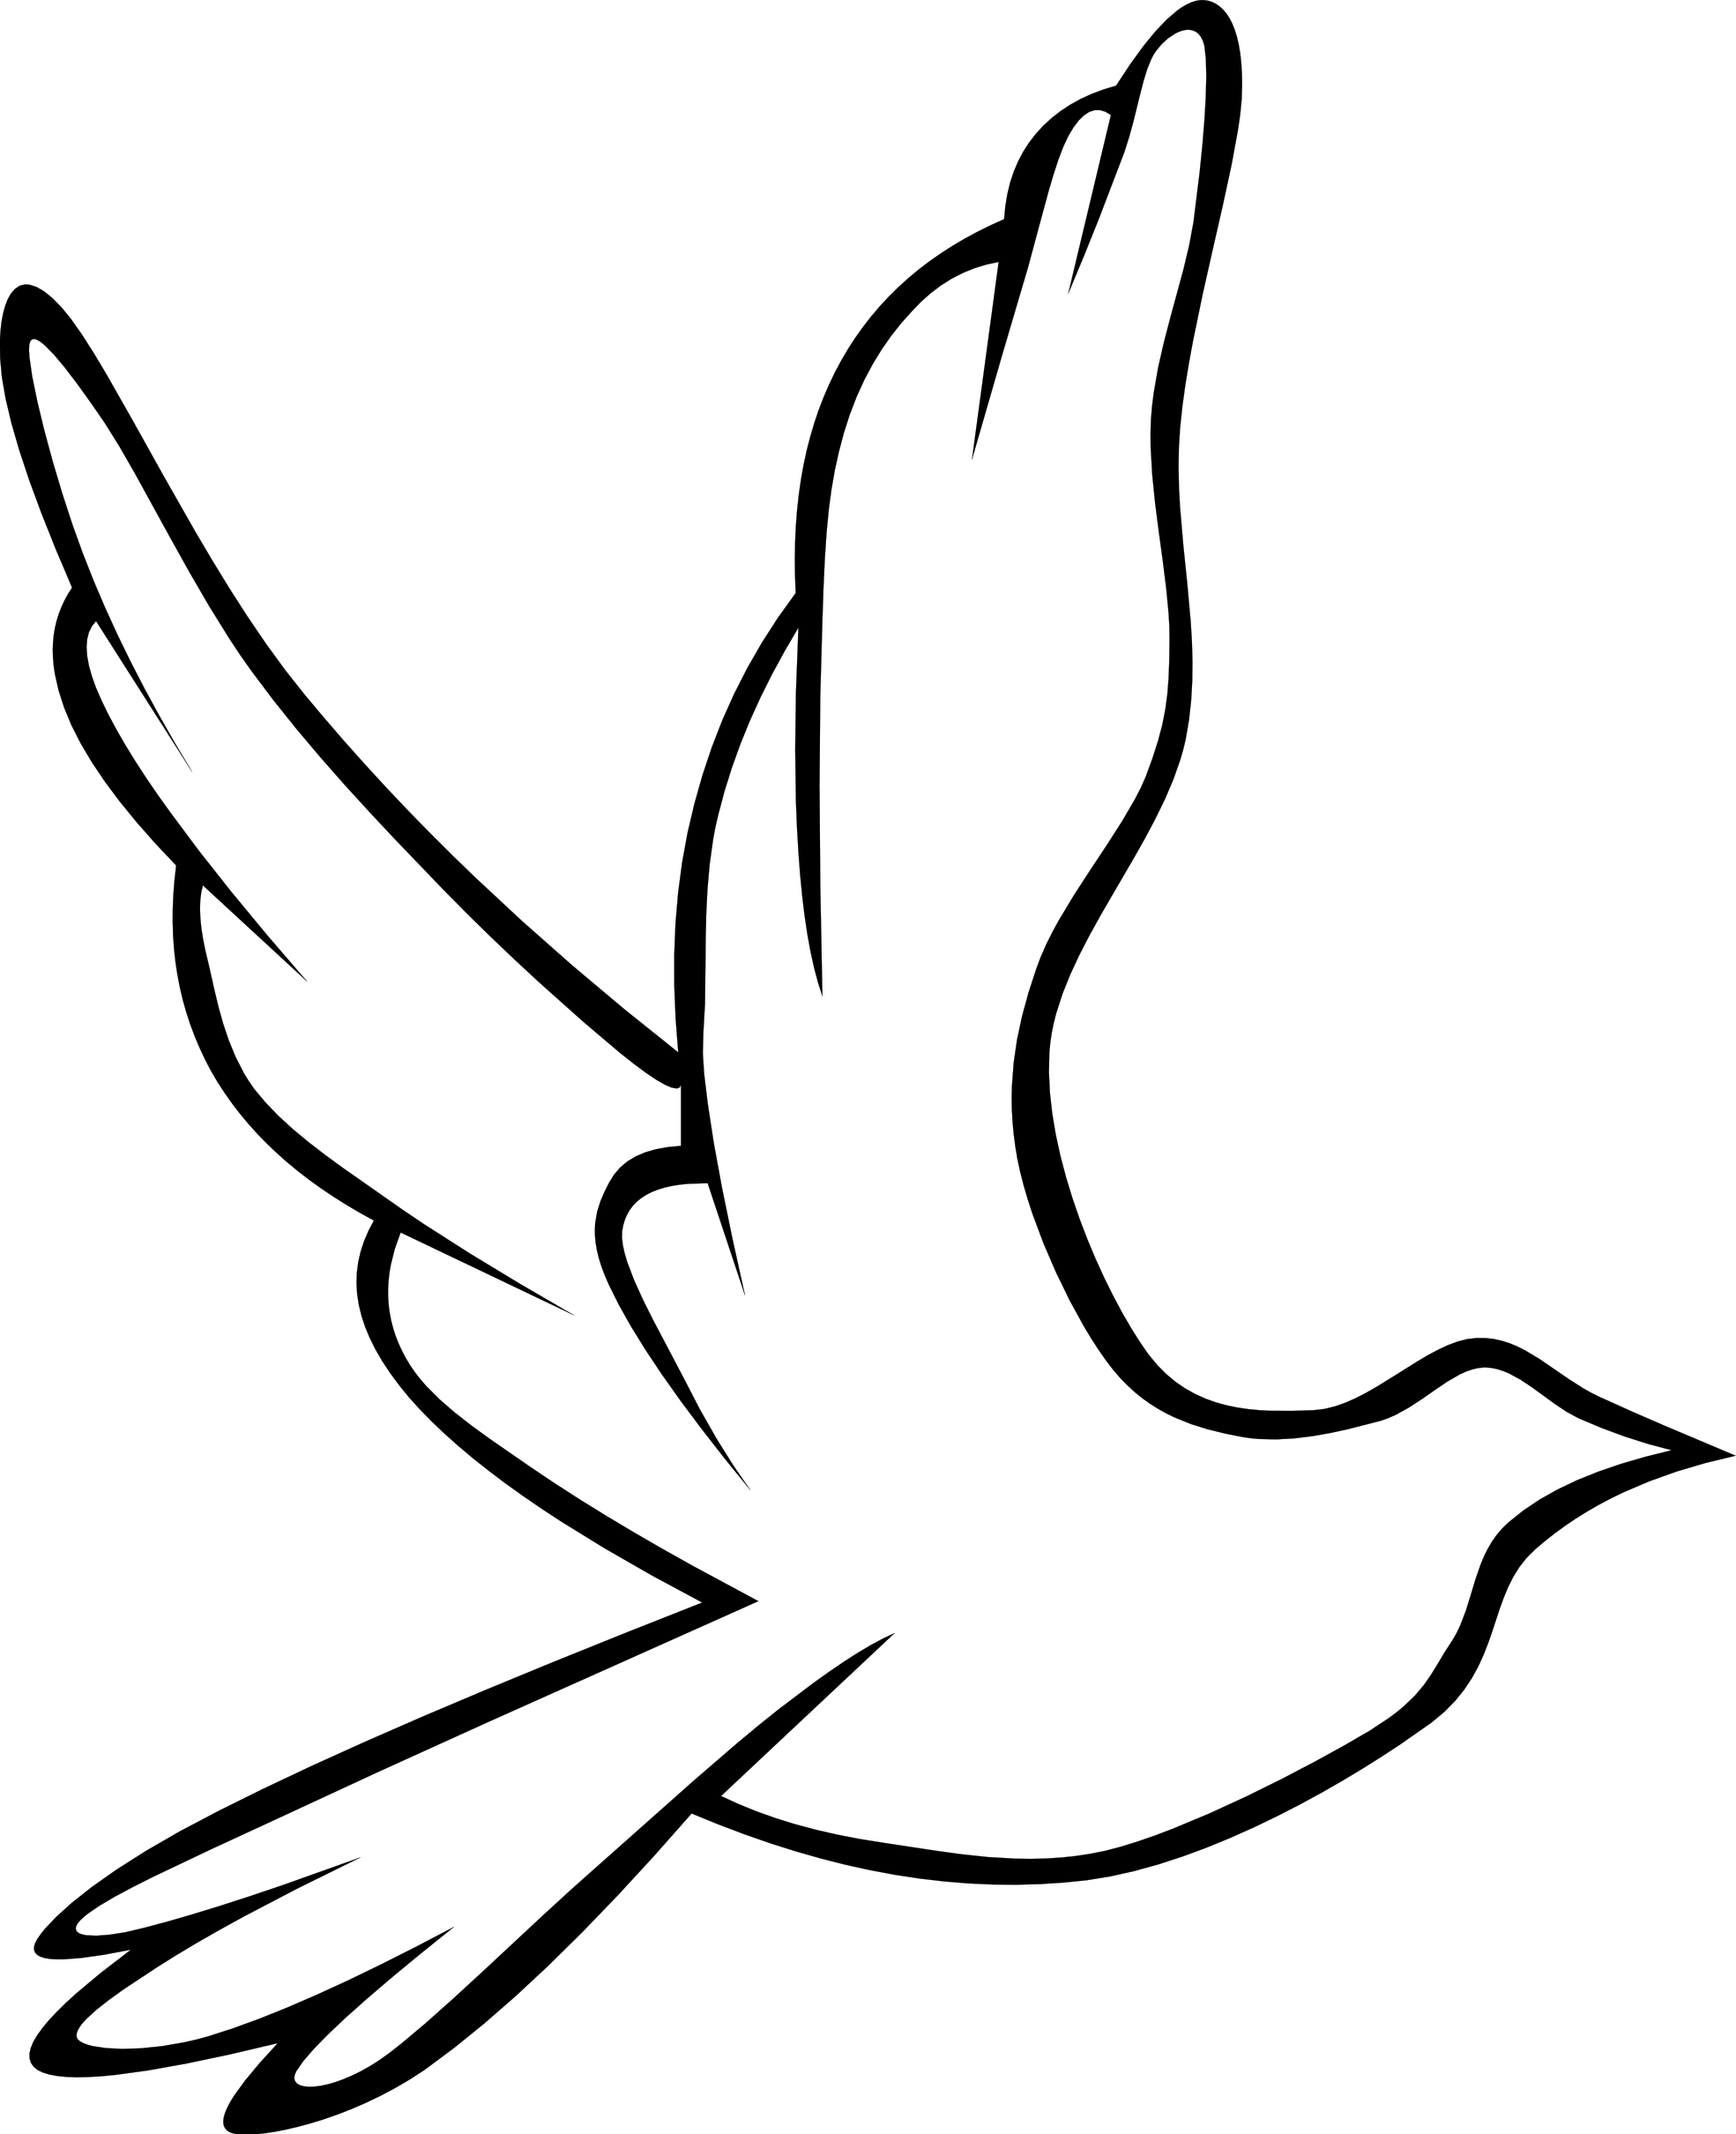 clipartist.net » Clip Art » peace dove 1 94 black white line art ...